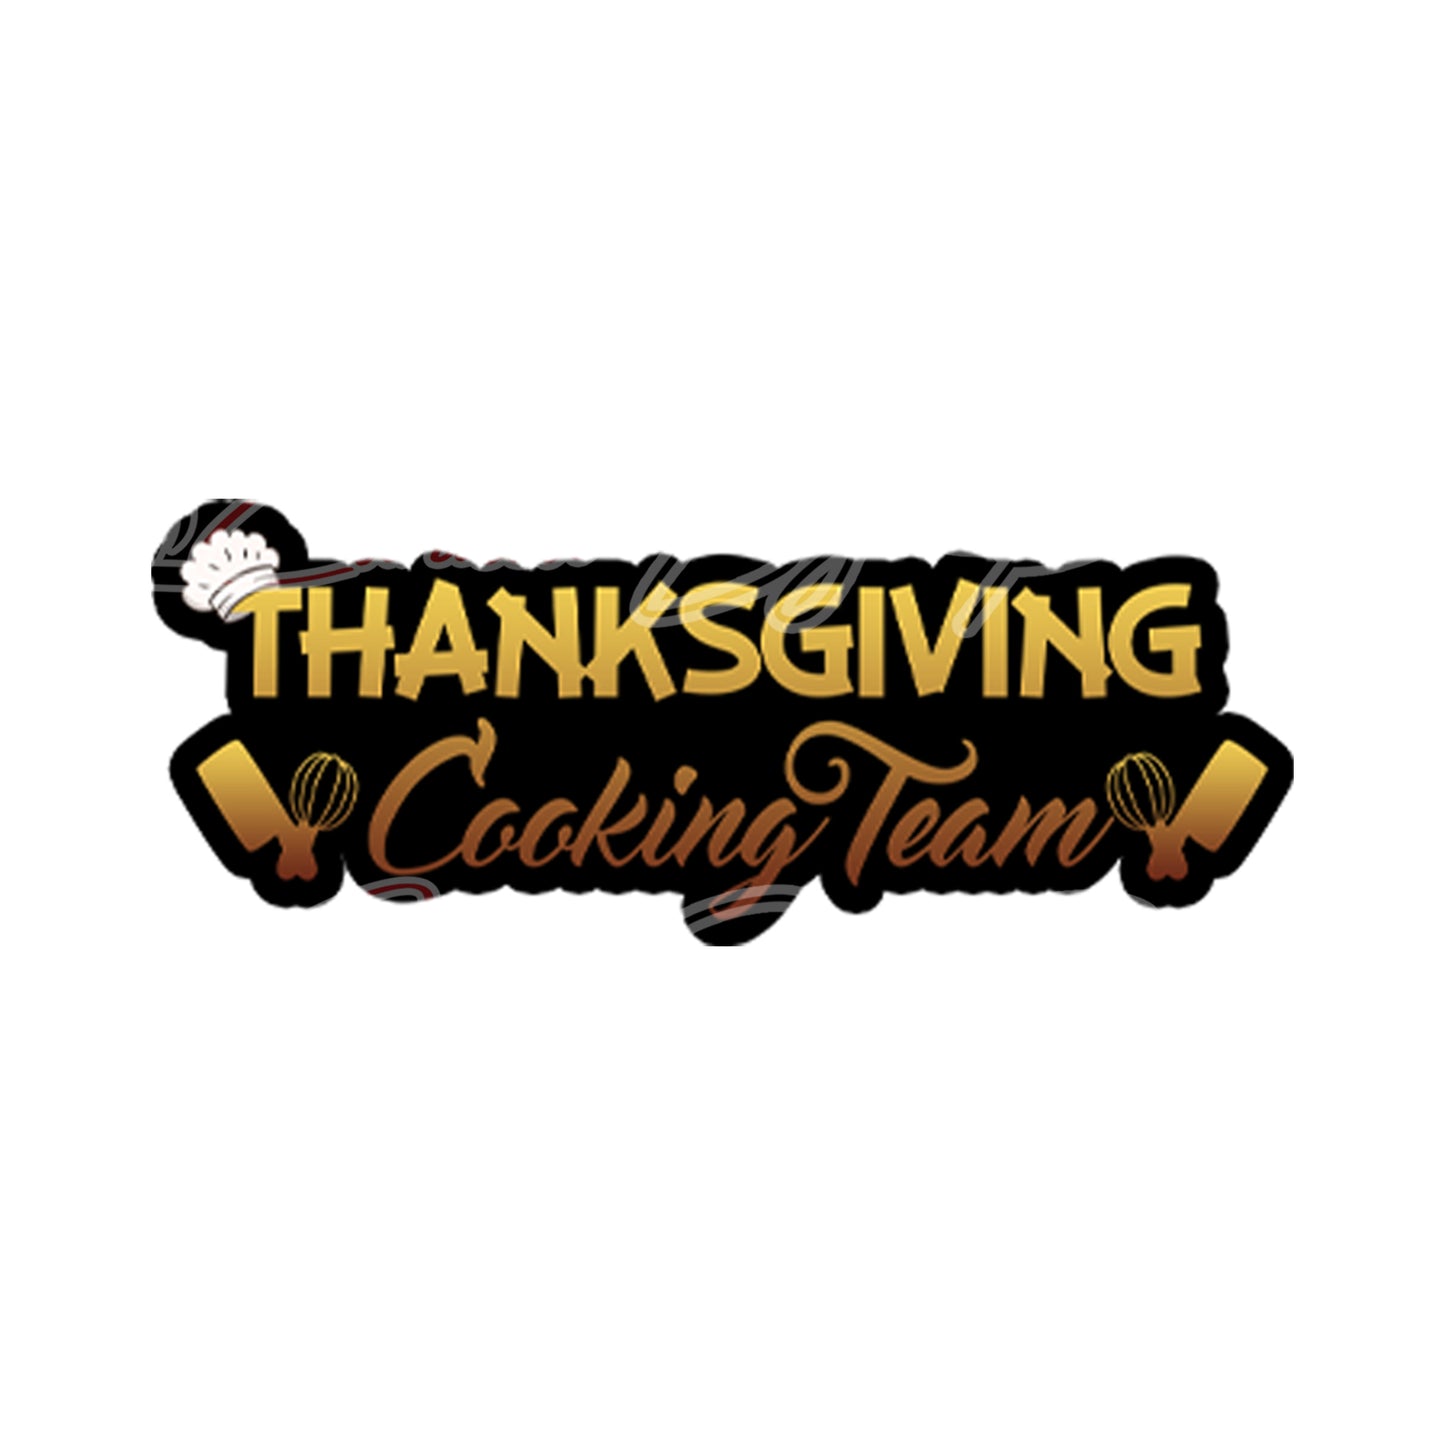 Thanksgiving Cooking Team